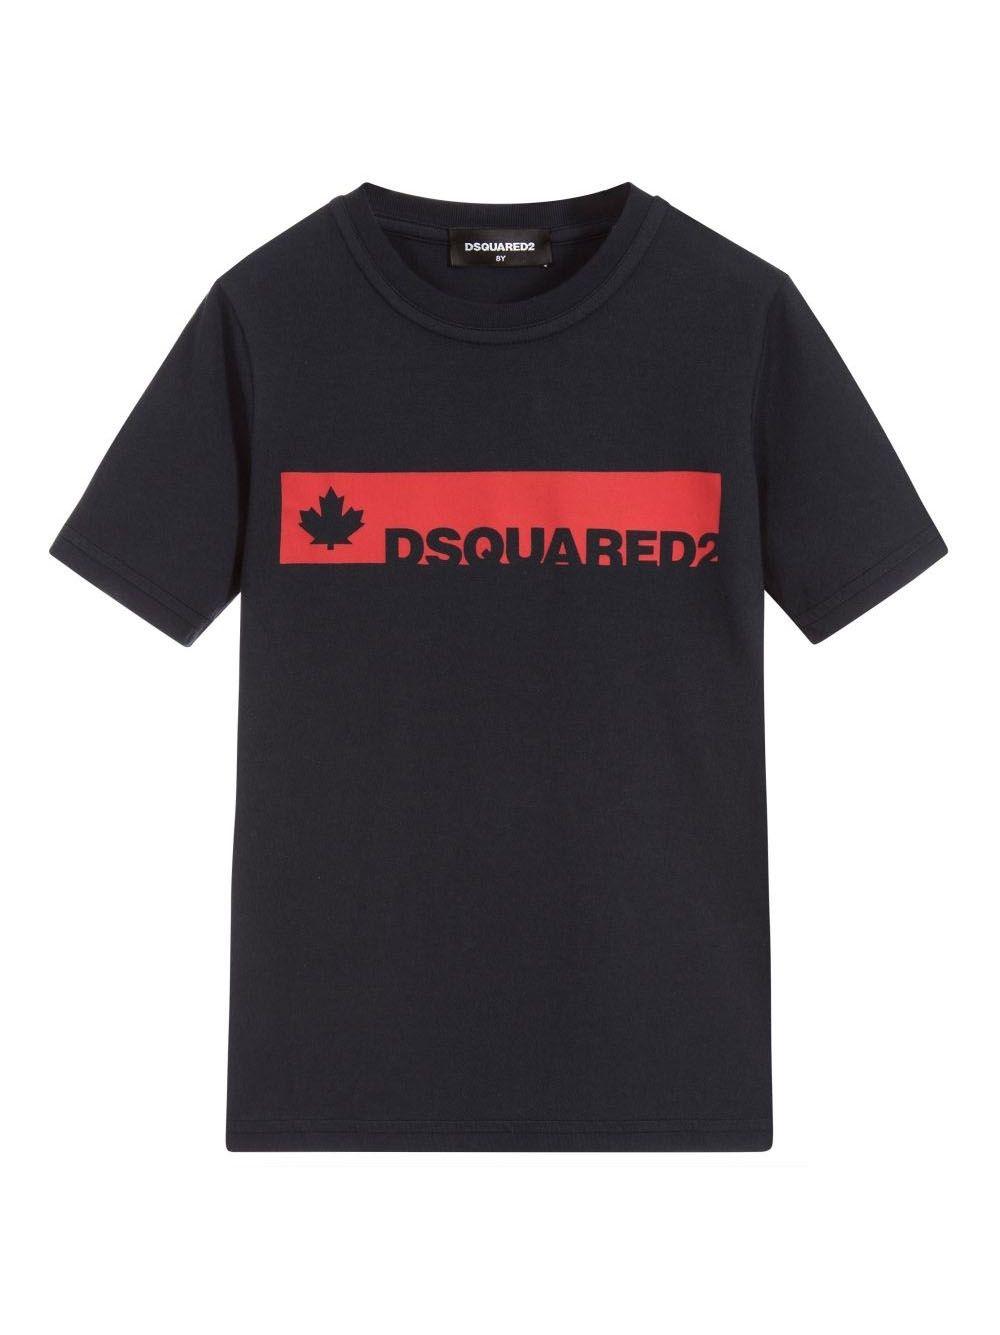 Black Gray and Red Logo - DSQUARED2 Kids Navy & Red Logo T-Shirt | Designerwear